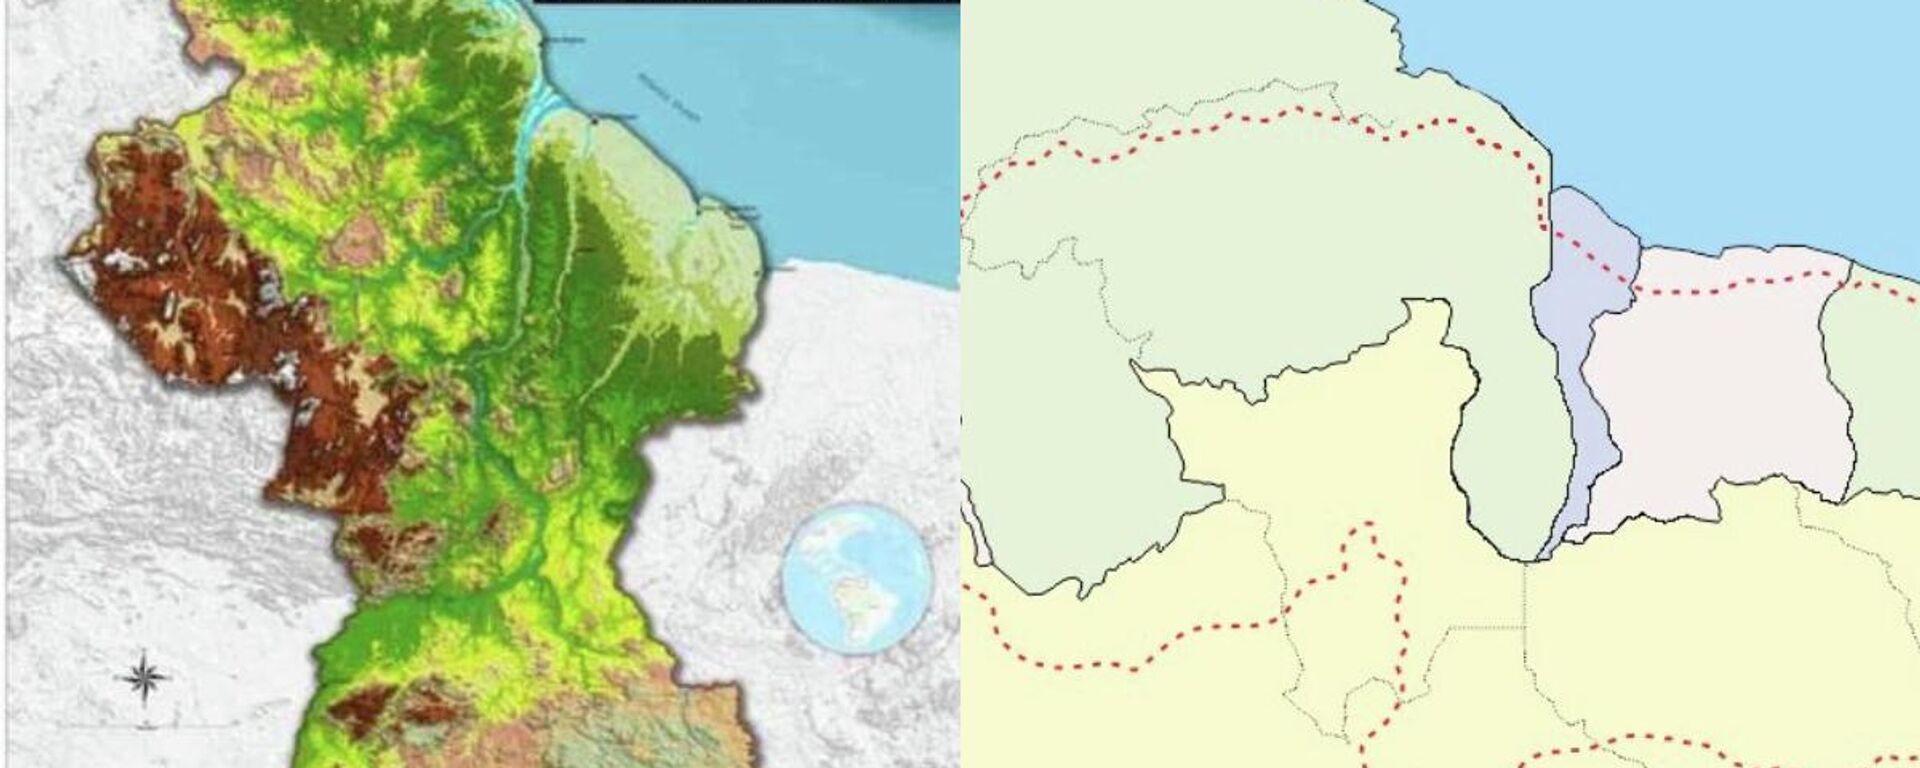 Mapa de Guayana y mapa de Venezuela  - Sputnik Mundo, 1920, 14.10.2022